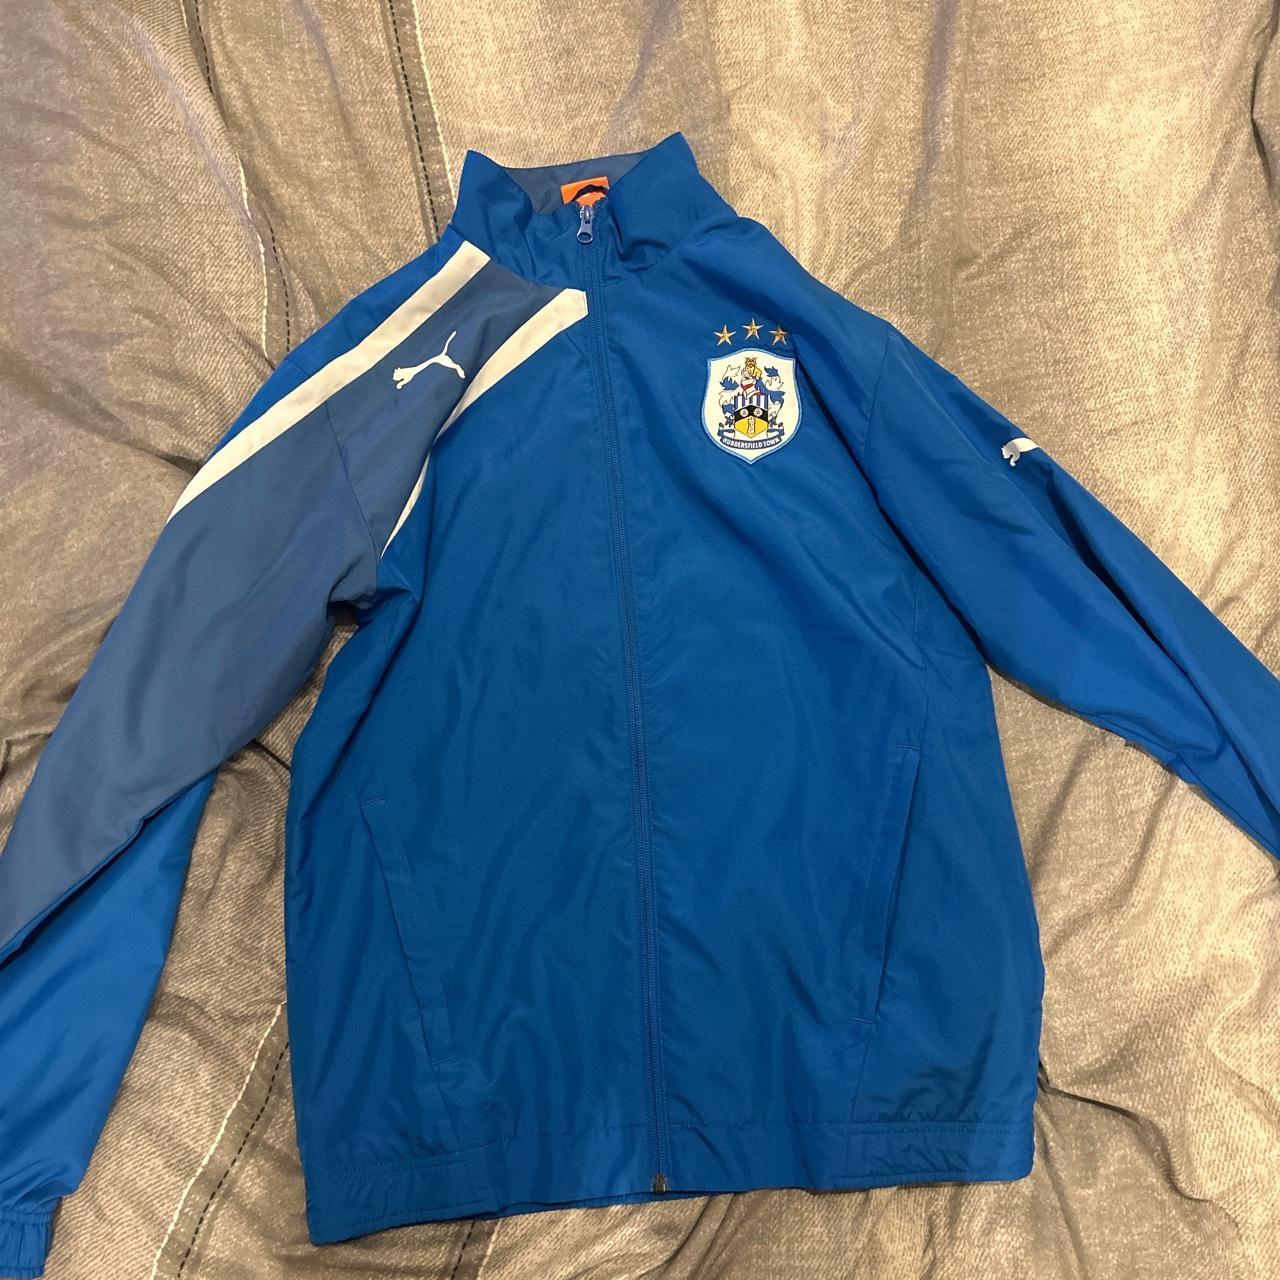 Huddersfield town training jacket. Size small. 8.5/10 - Depop